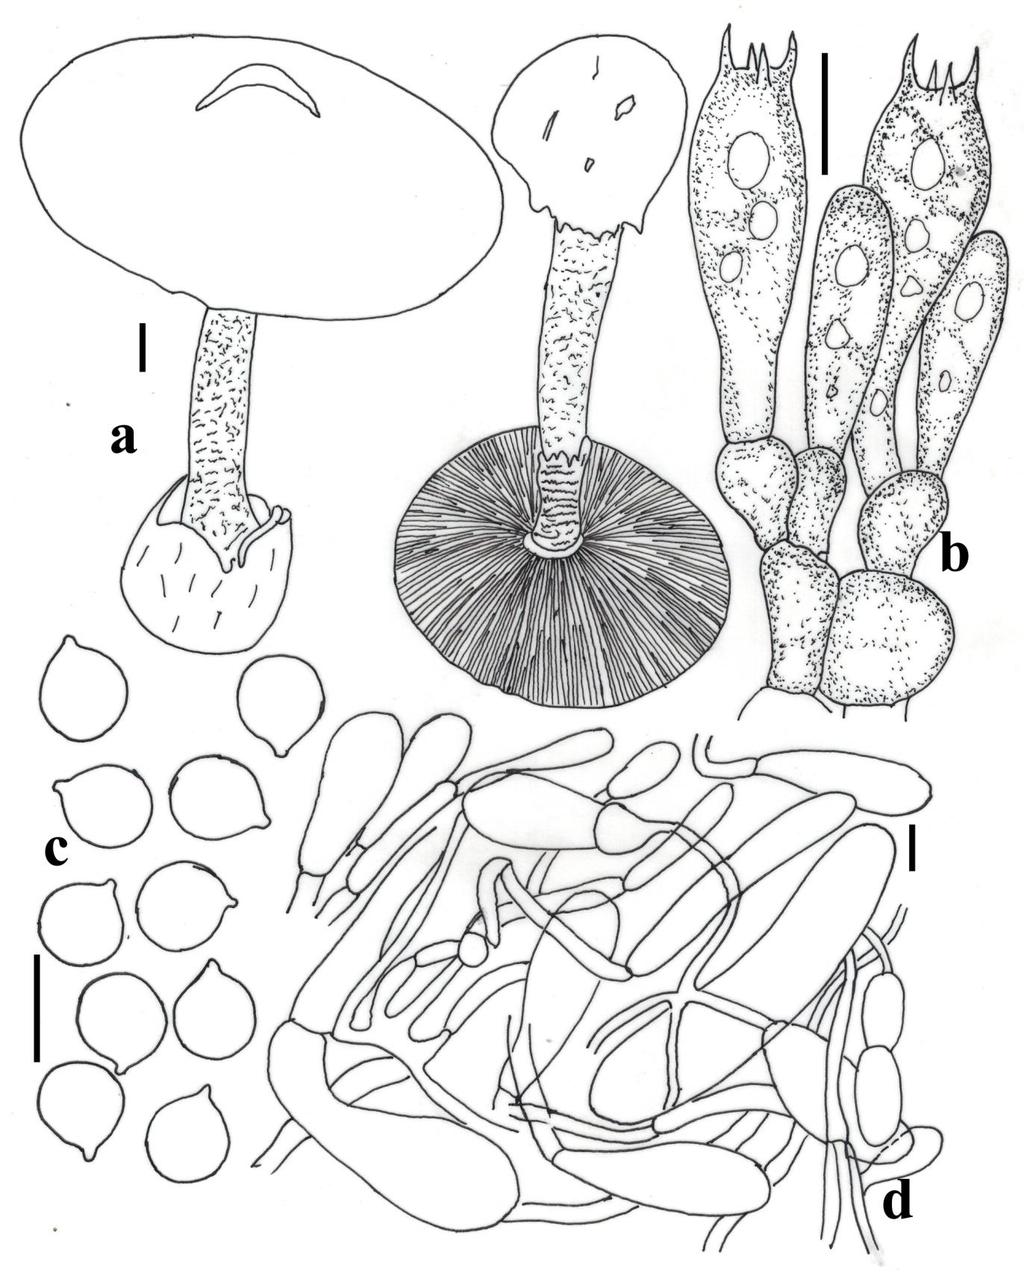 Fig. 8 Amanita pallidorosea. a Basidiocarps. b Hymenium & subhymenium.